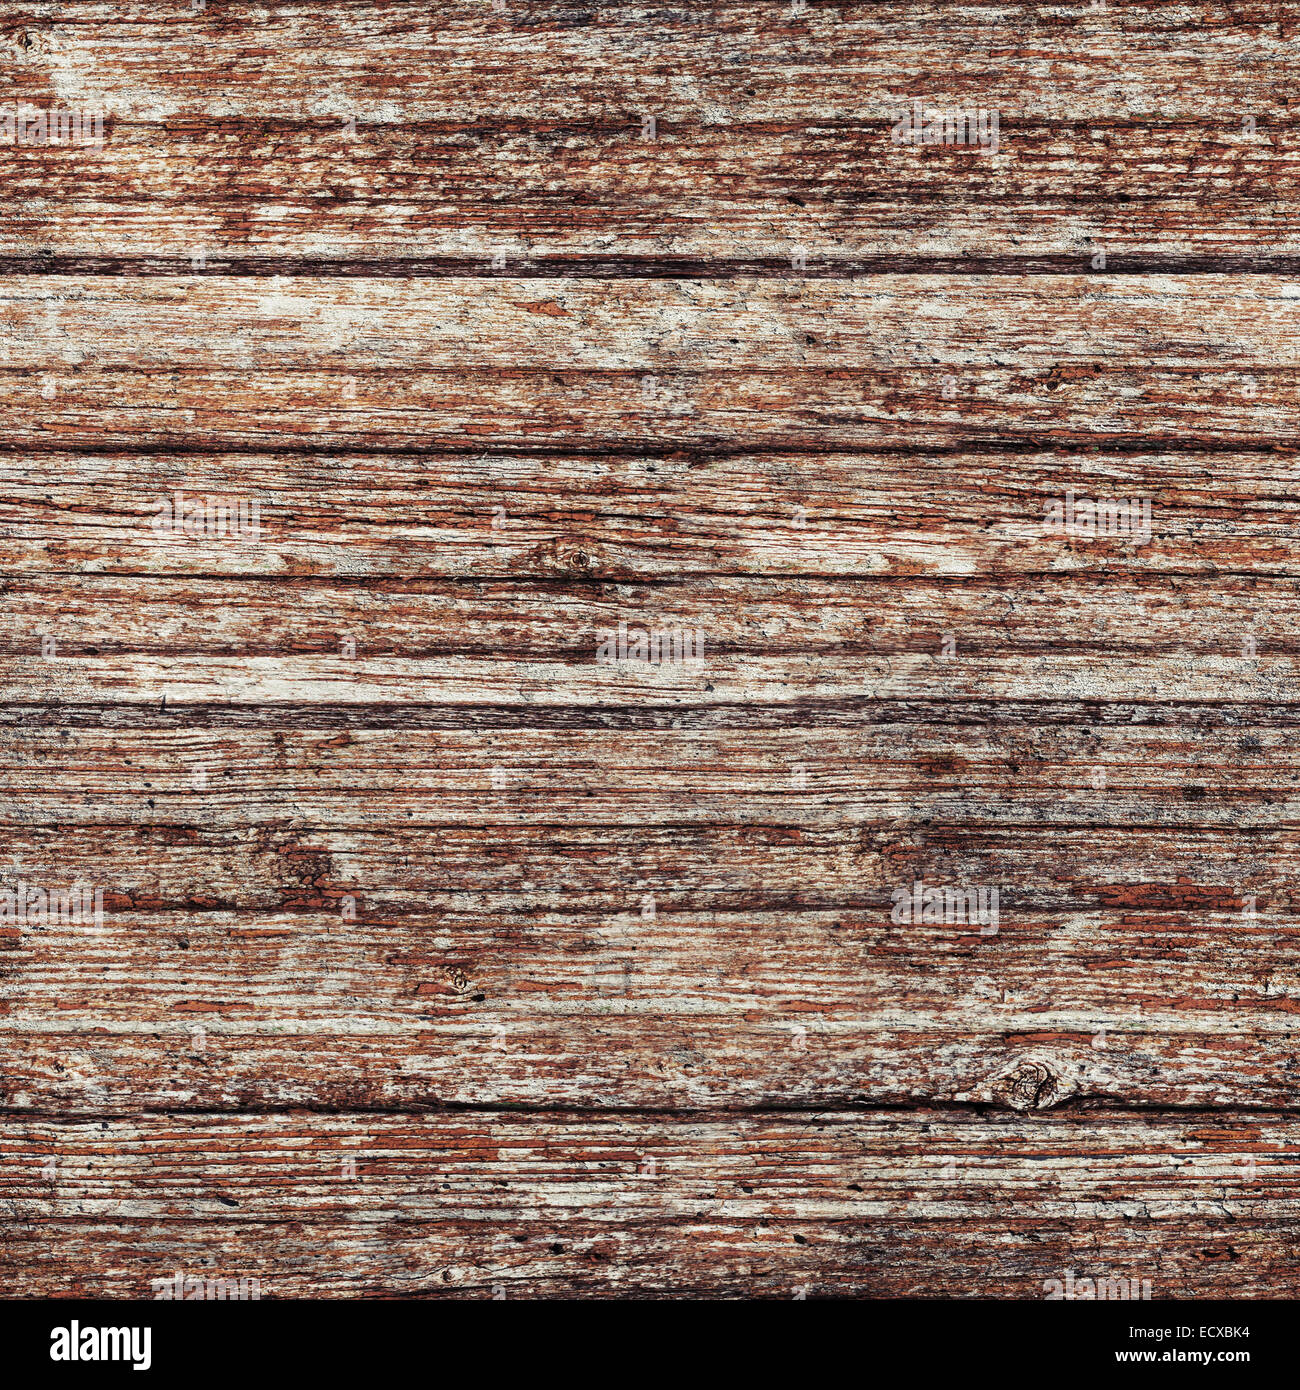 Gris vieja pared de madera con pintura roja dañada, la capa de fondo cuadrada perfecta textura fotográfica Foto de stock